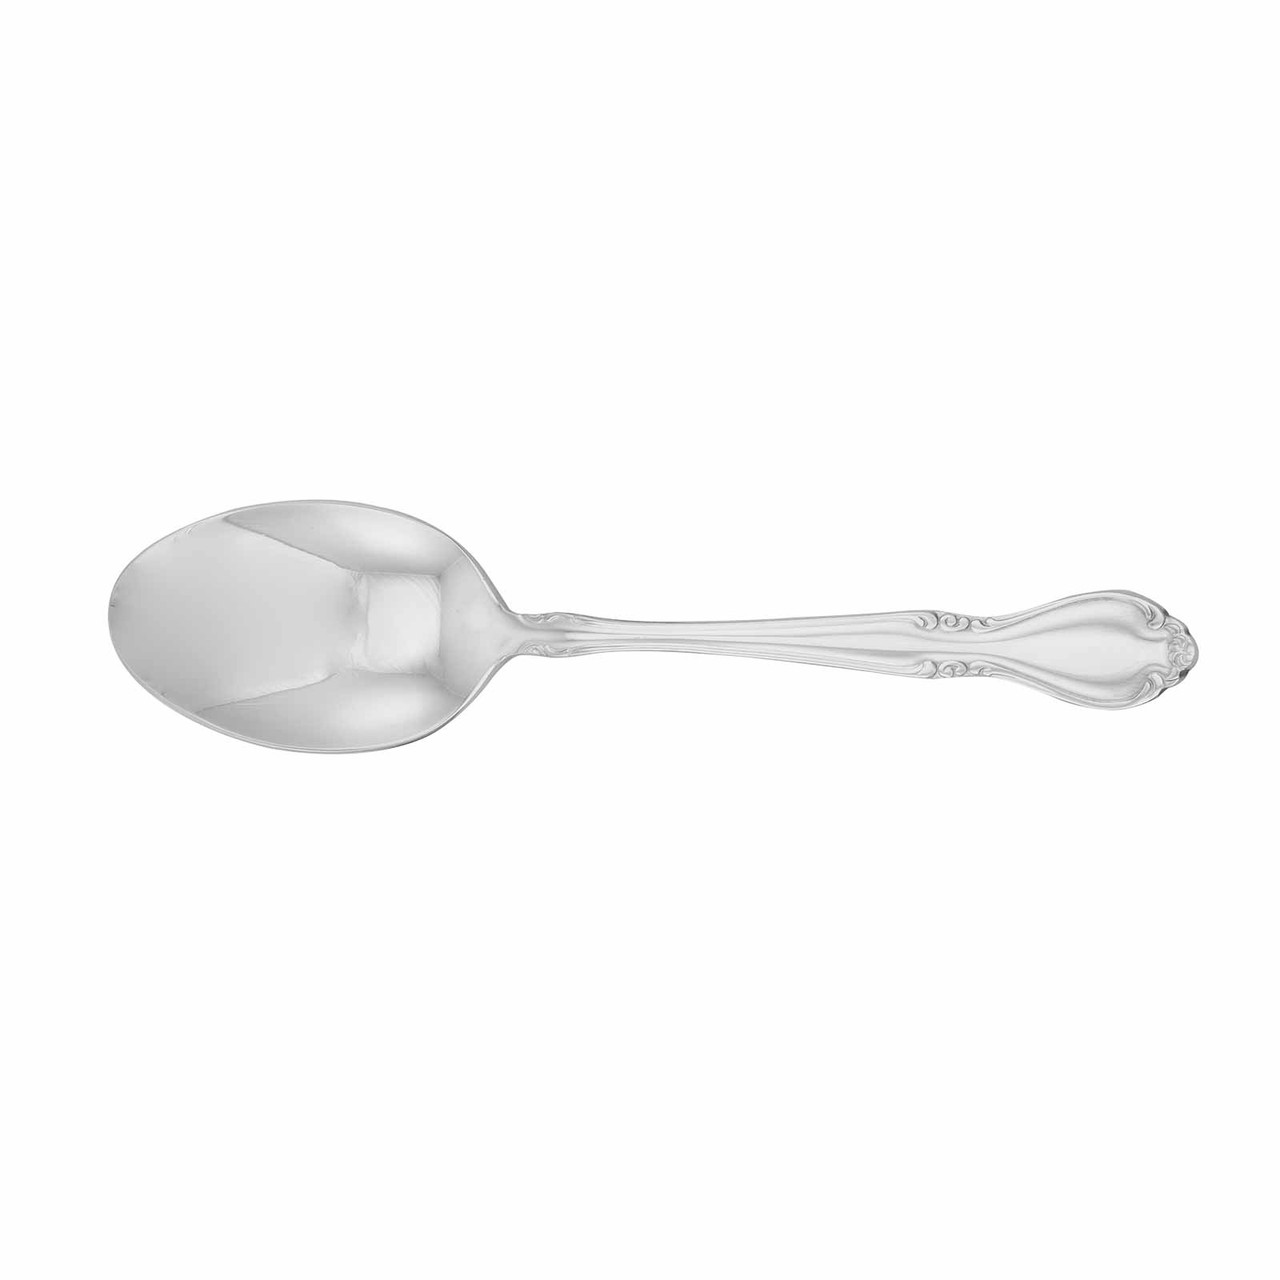 Walco 9103 Illustra - Serving Spoon - Heavyweight